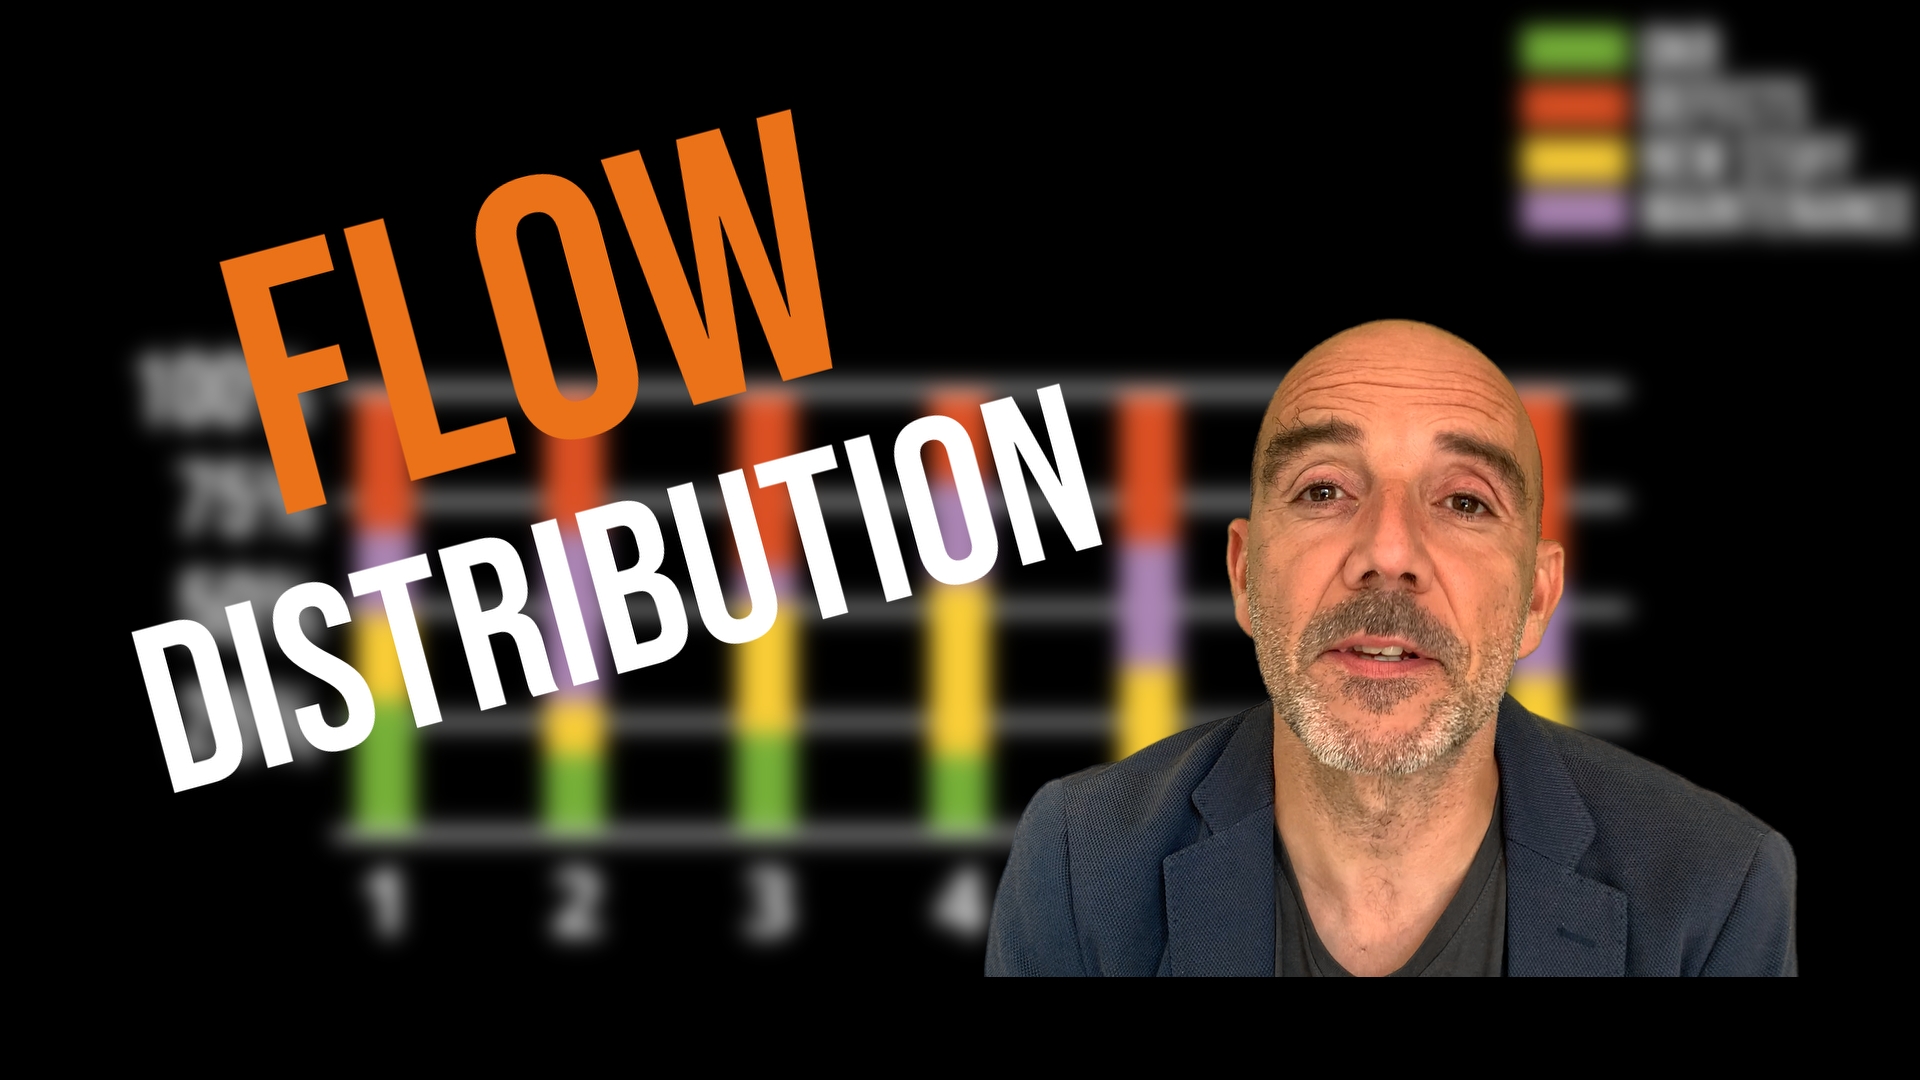 Flow Distribution